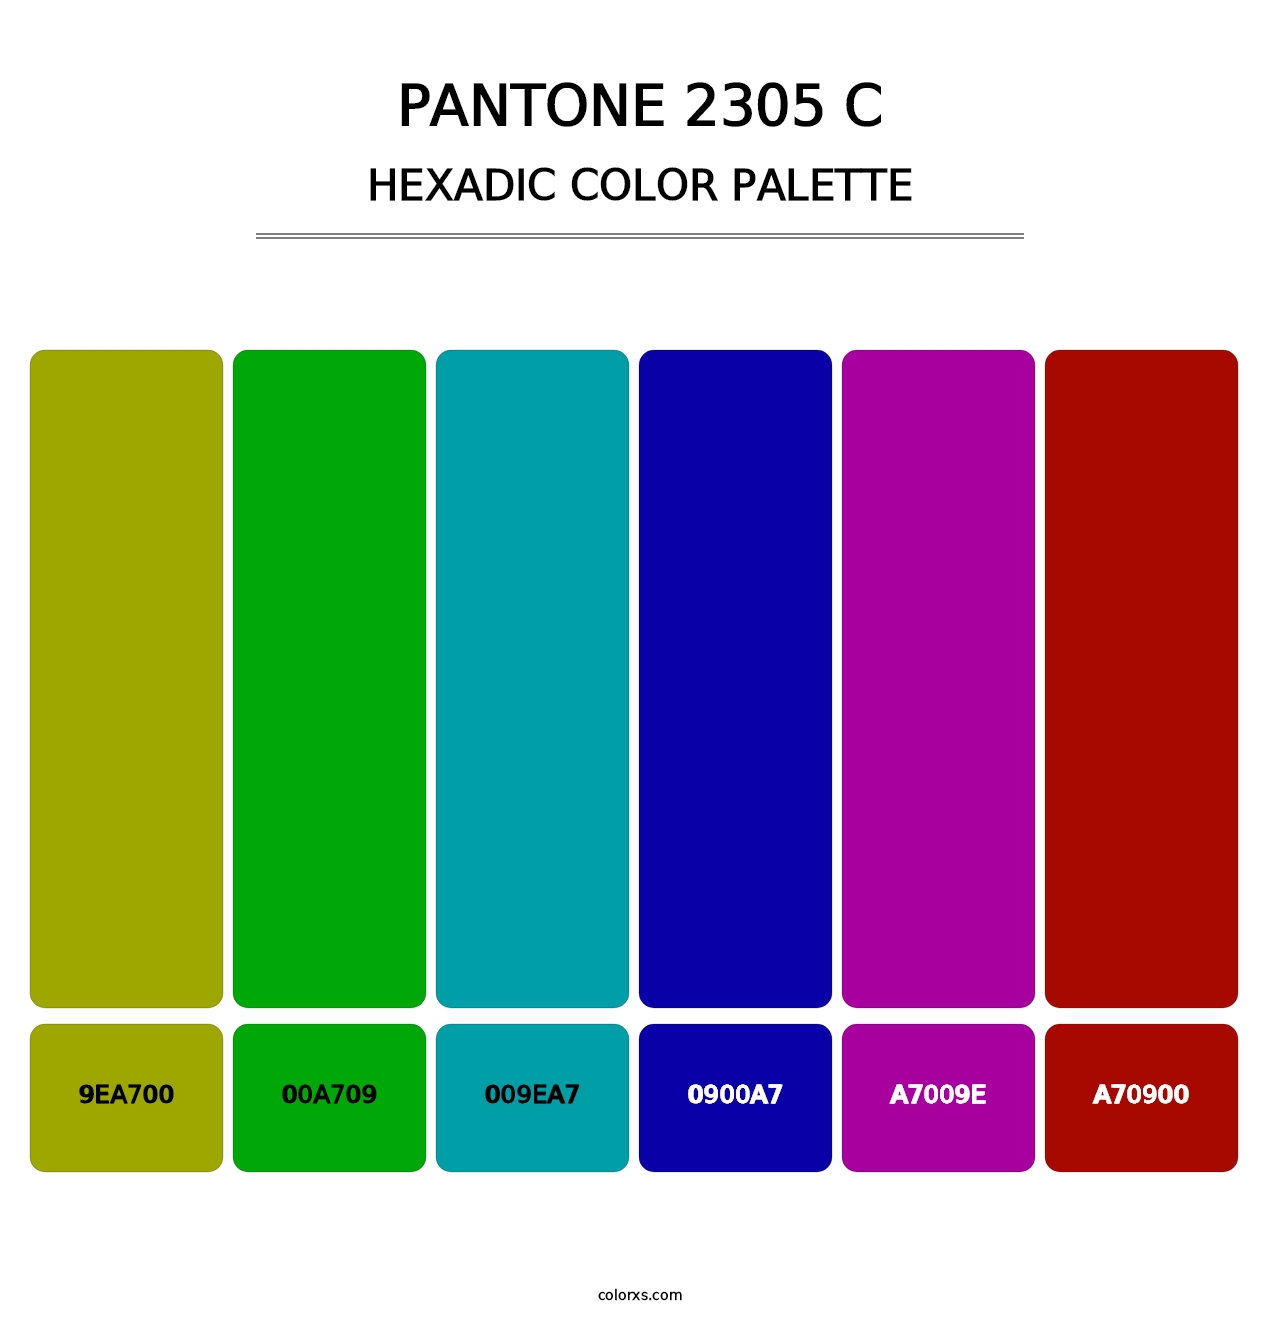 PANTONE 2305 C - Hexadic Color Palette